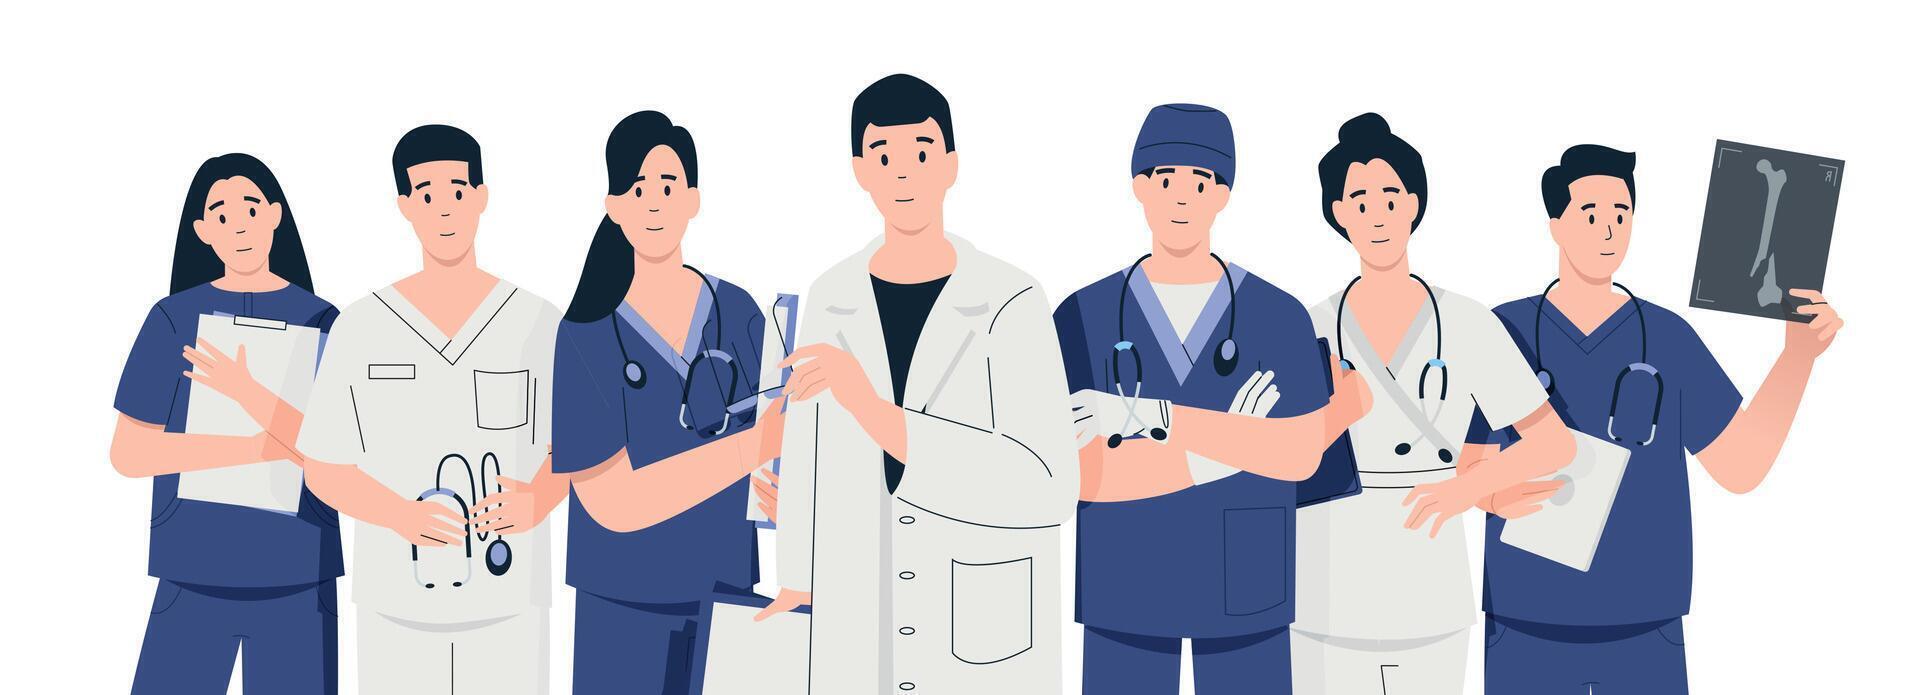 Doctors team. Cartoon characters in medical uniform, doctor nurse dentist doctor assistant characters in healthcare career, healthcare concept. Vector set